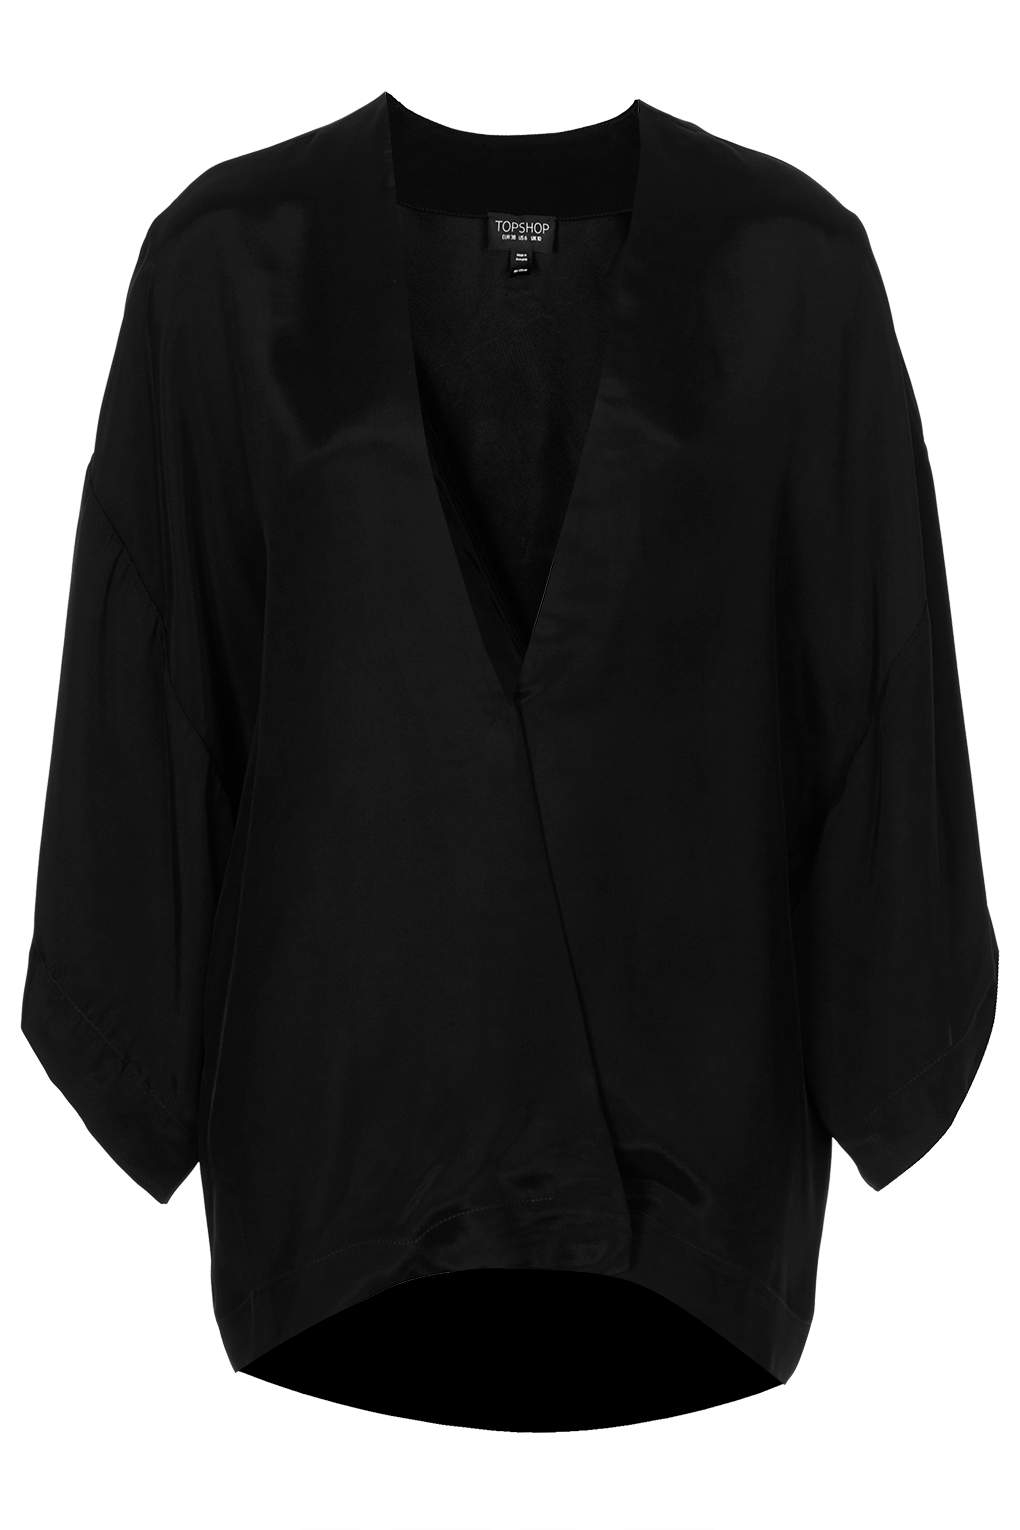 Lyst - Topshop Plain Jacket Style Kimono in Black